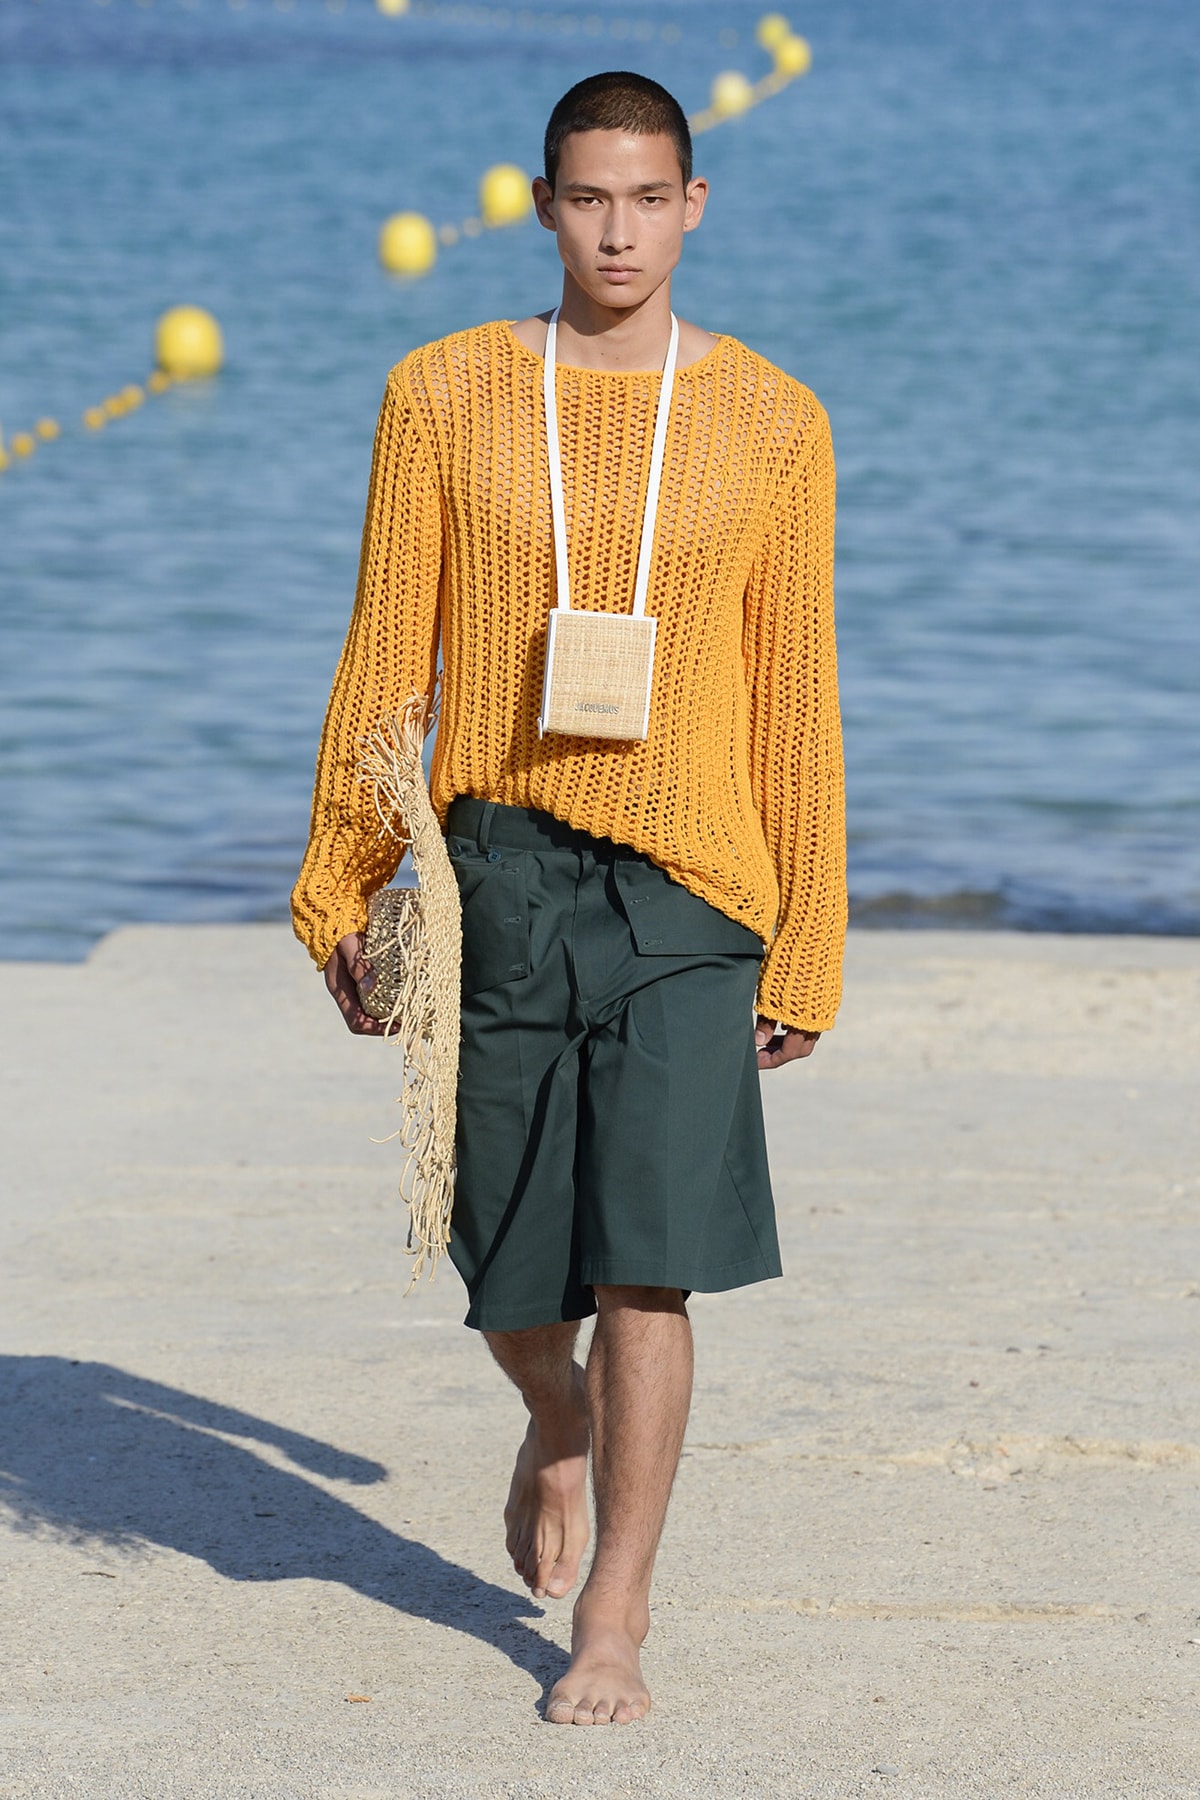 Jacquemus Spring Summer 2019 Menswear Collection debut premiere simon porte paris fashion week first